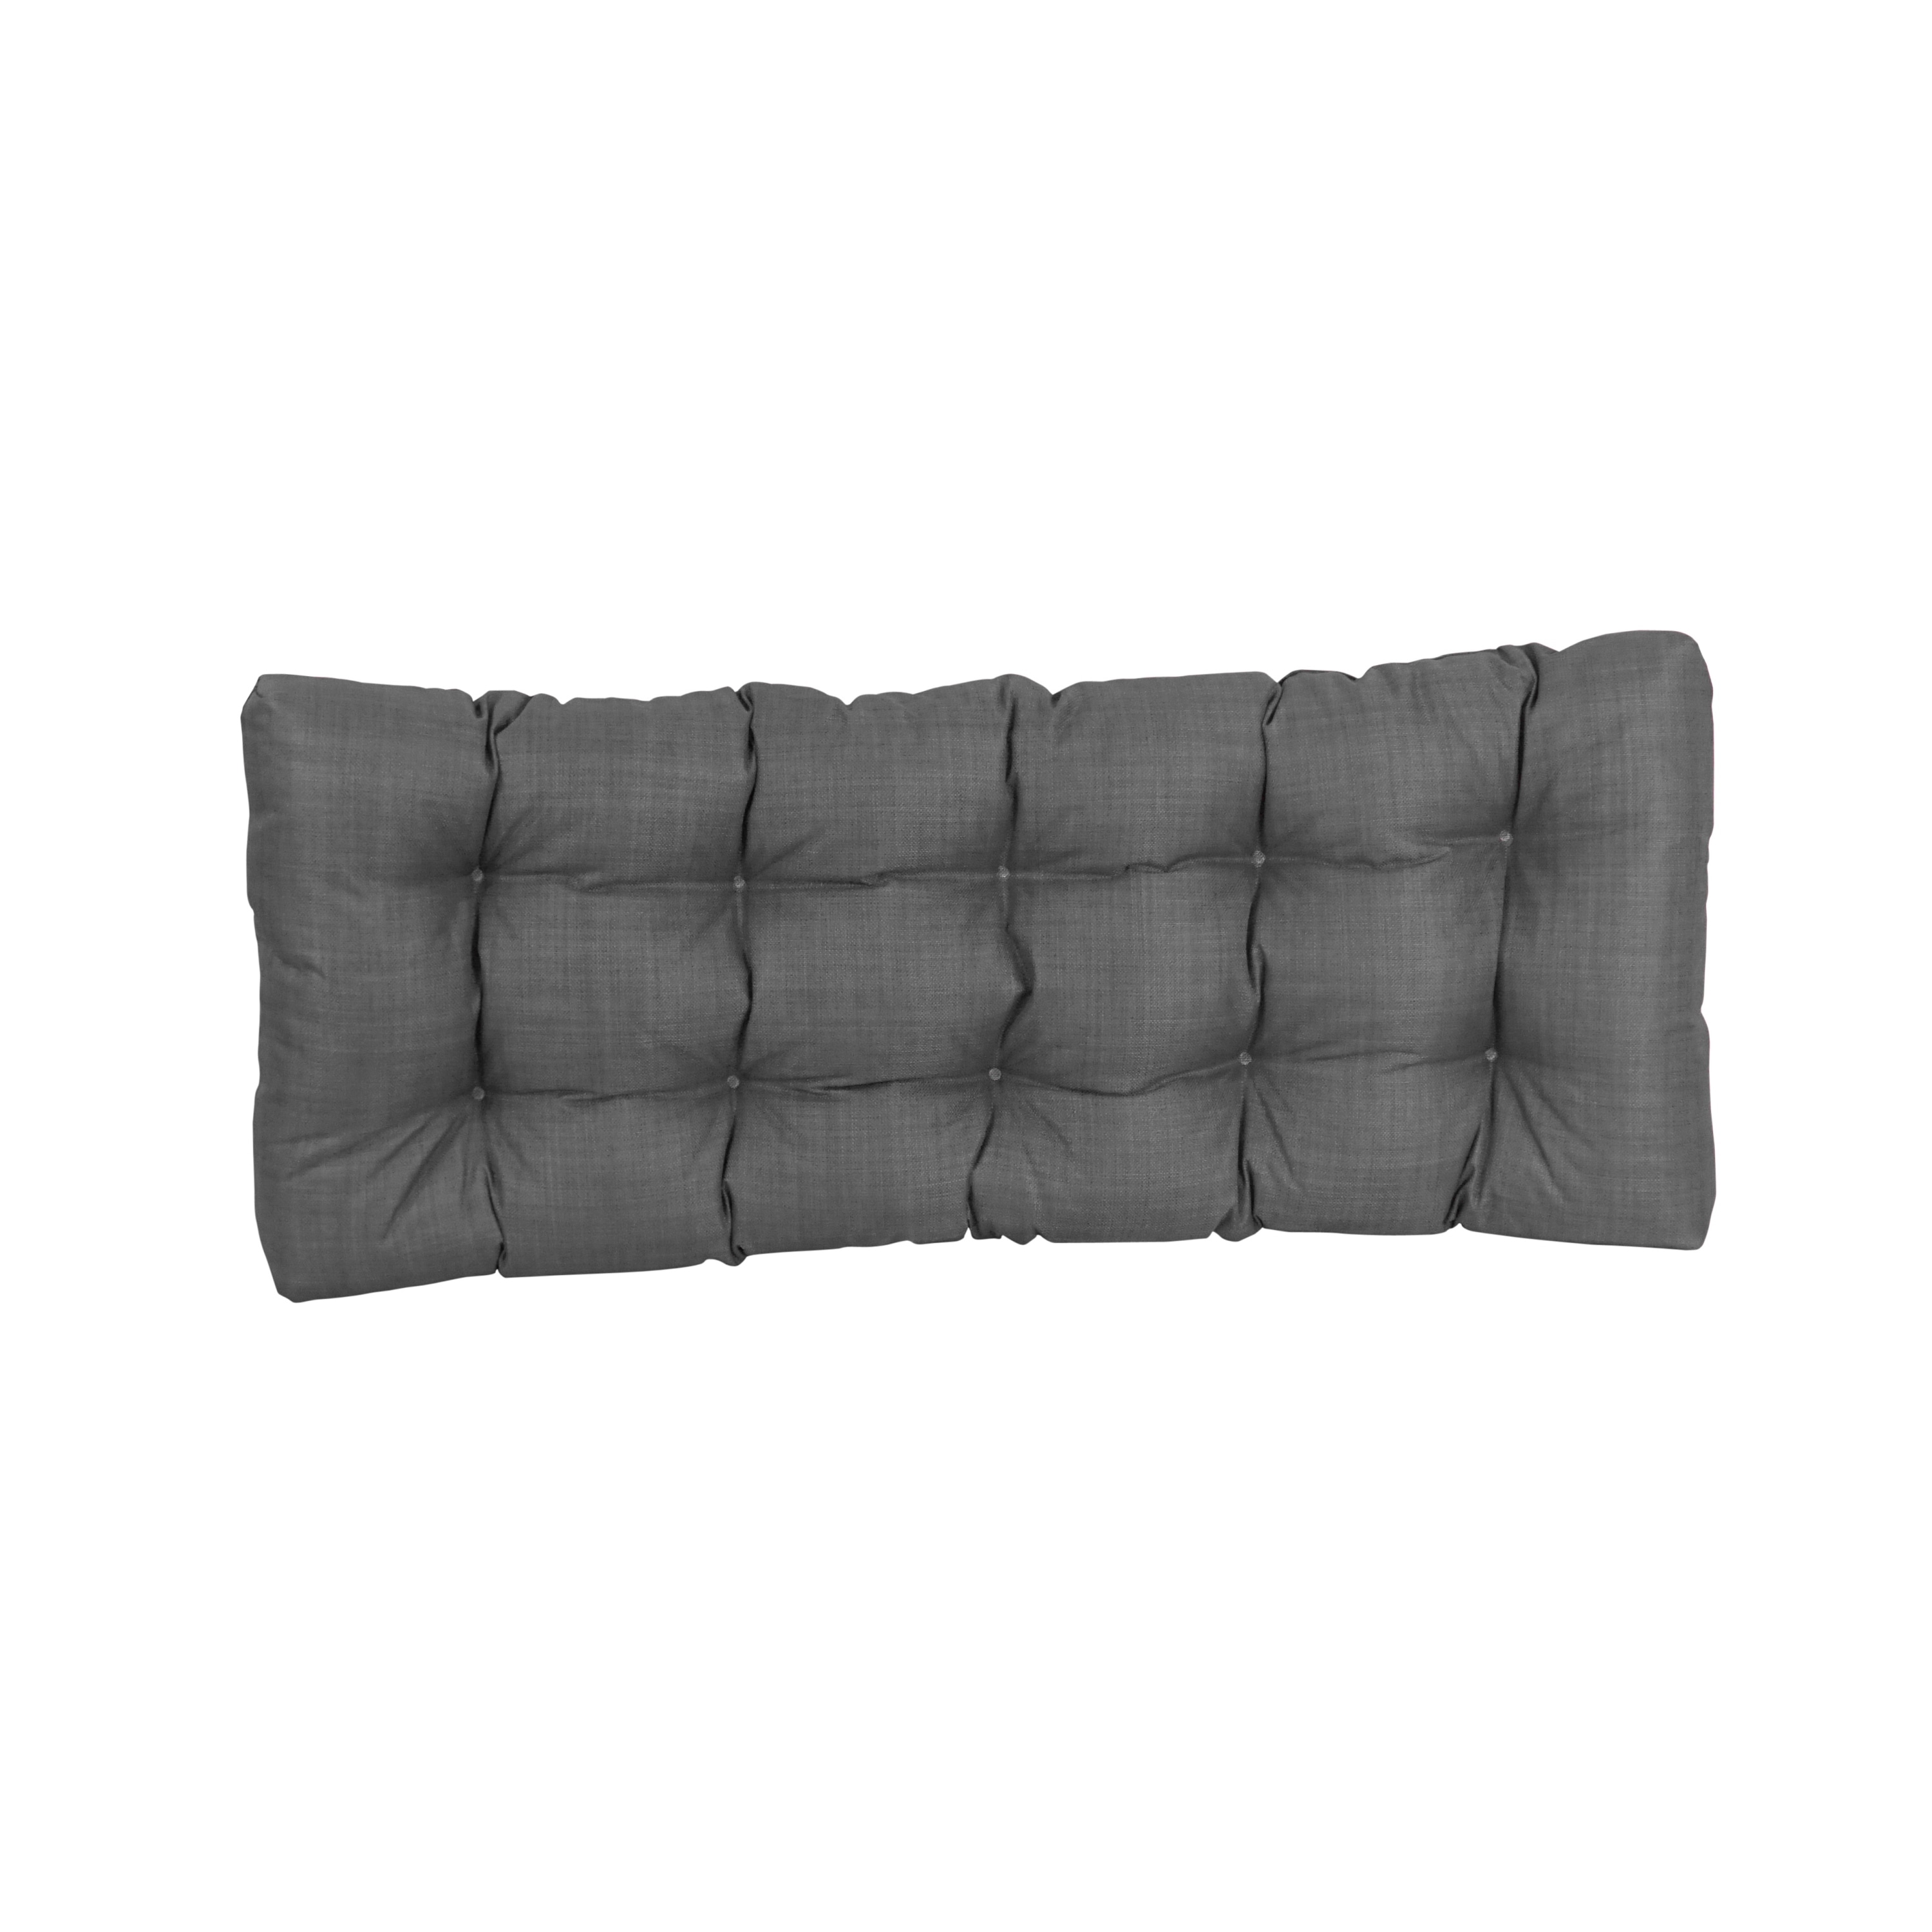 63-inch by 19-inch Spun Polyester Bench Cushion - Avocado